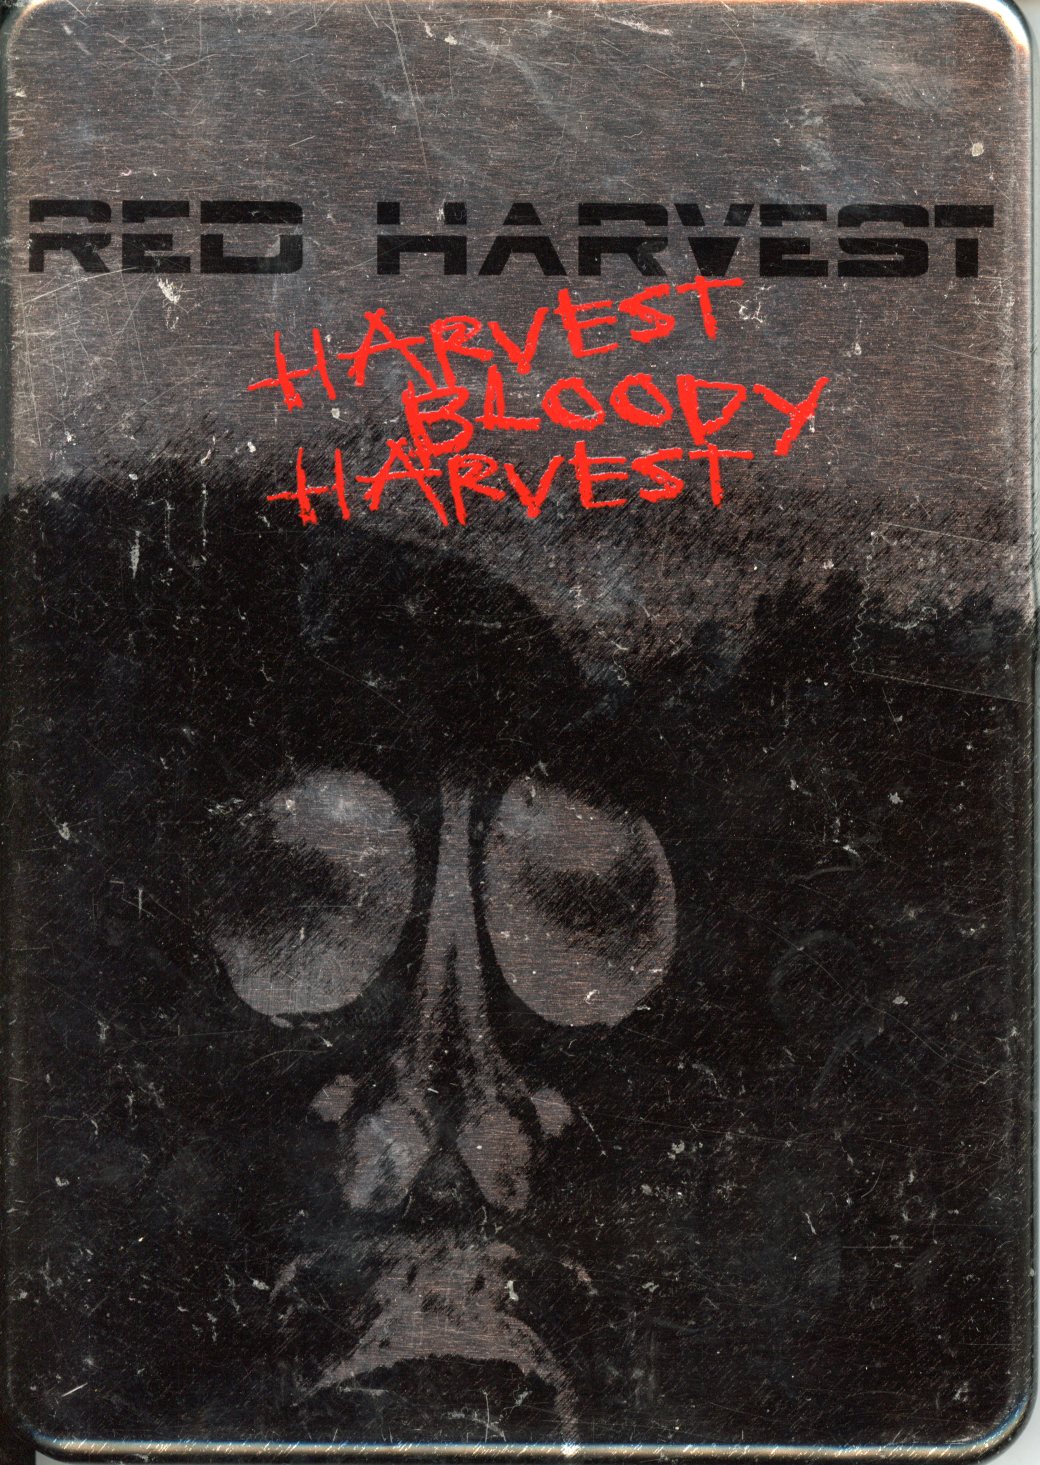 HARVEST BLOODY HAVEST - RED HAVEST - BOÎTE MÉTAL DVD MUSICAUX